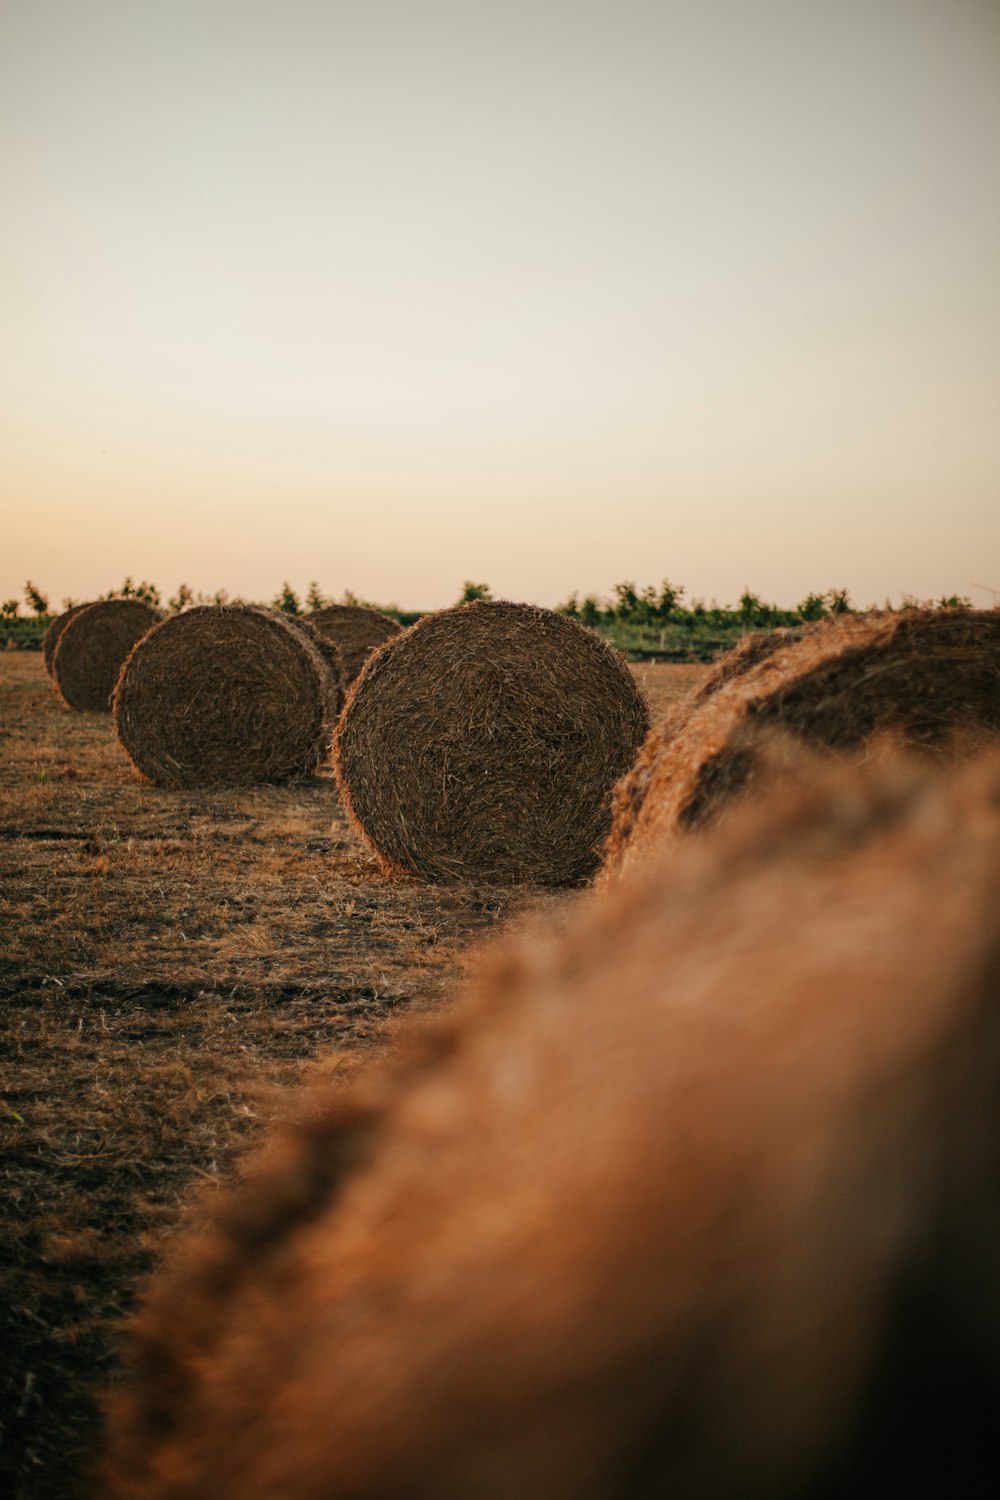 brown hays on brown field during daytime